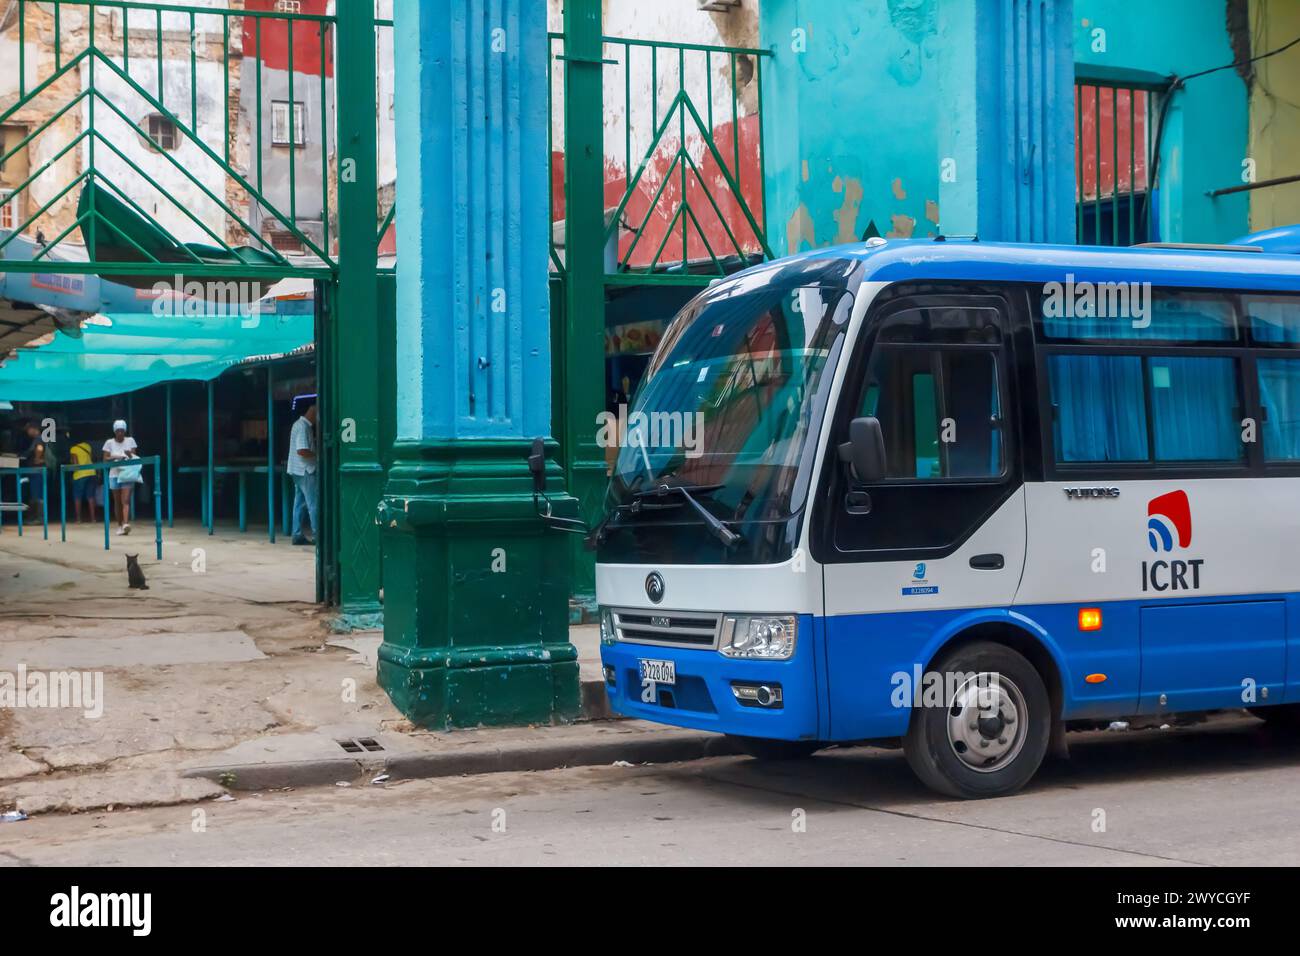 Yutong bus with the ICRT logo in Havana, Cuba Stock Photo